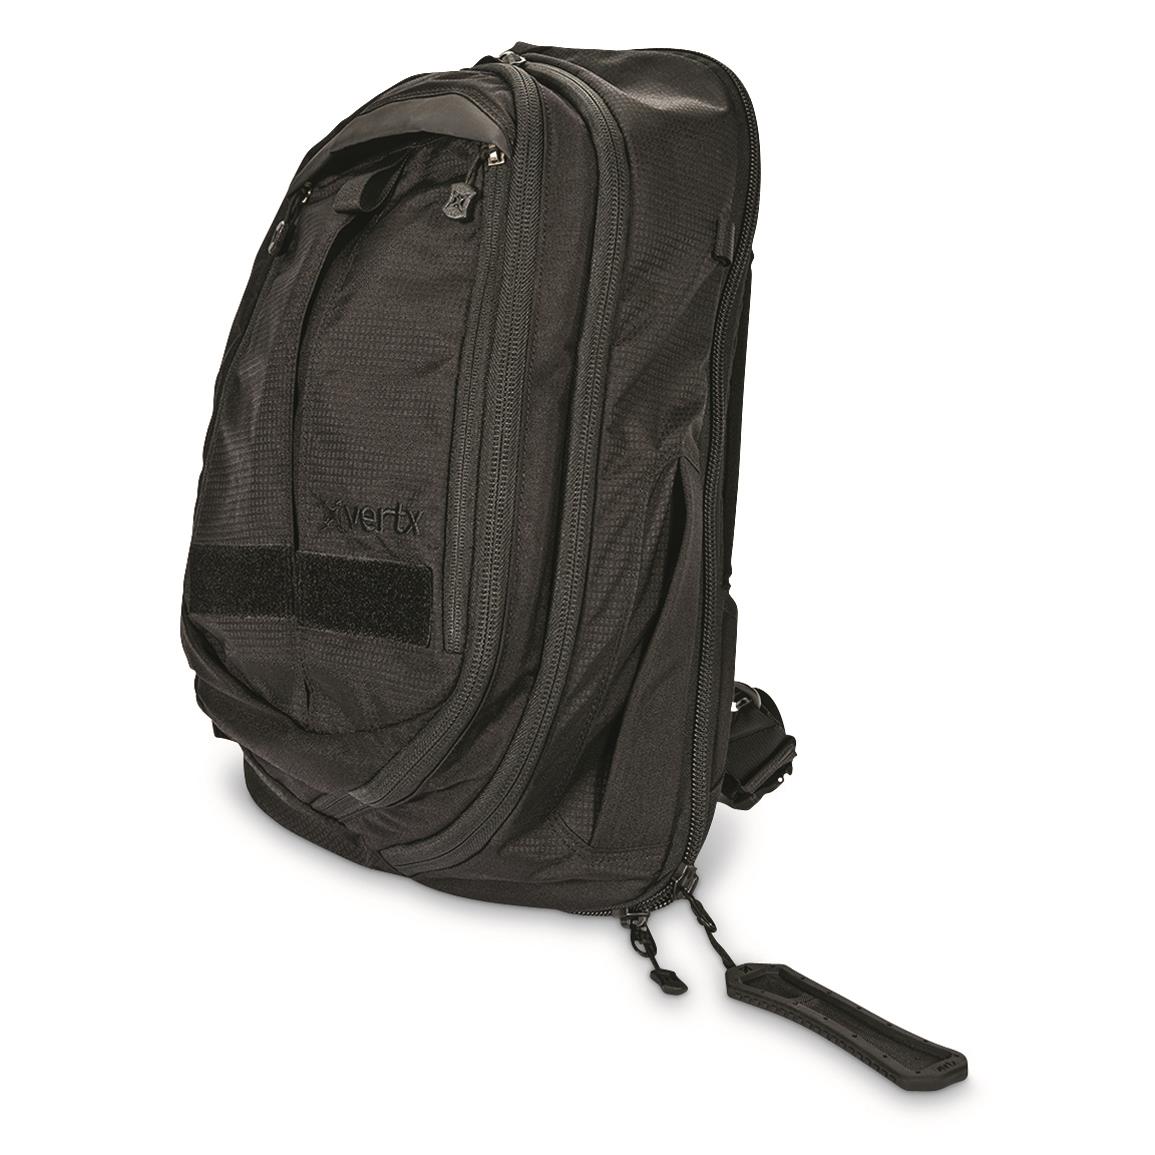 Vertx EDC Commuter Sling Pack, 23 Liter - 709901, Military Style Backpacks & Bags at Sportsman&#39;s ...